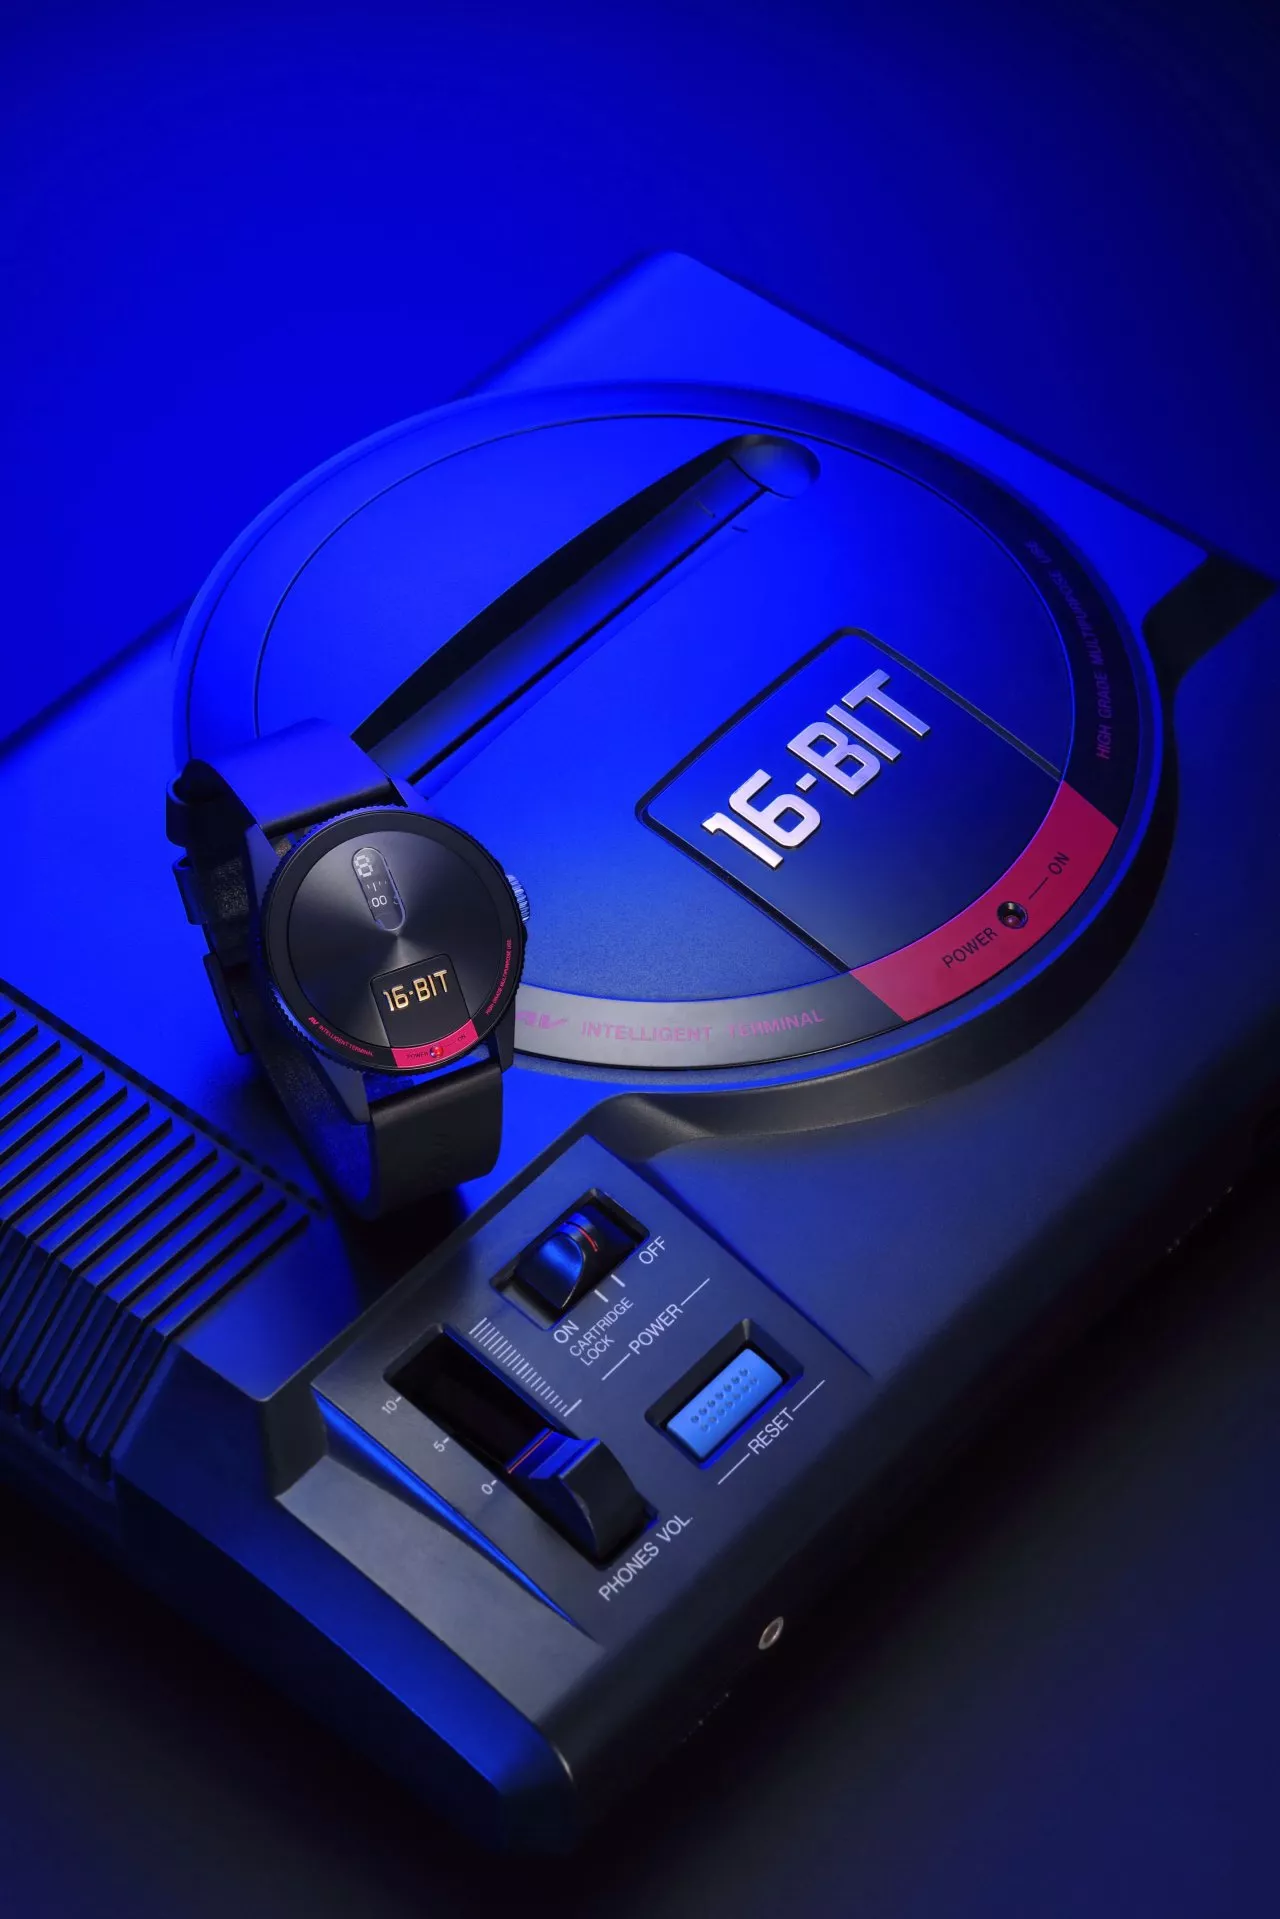 Sega Mega Drive-Inspired Watches Priced at $800 Each